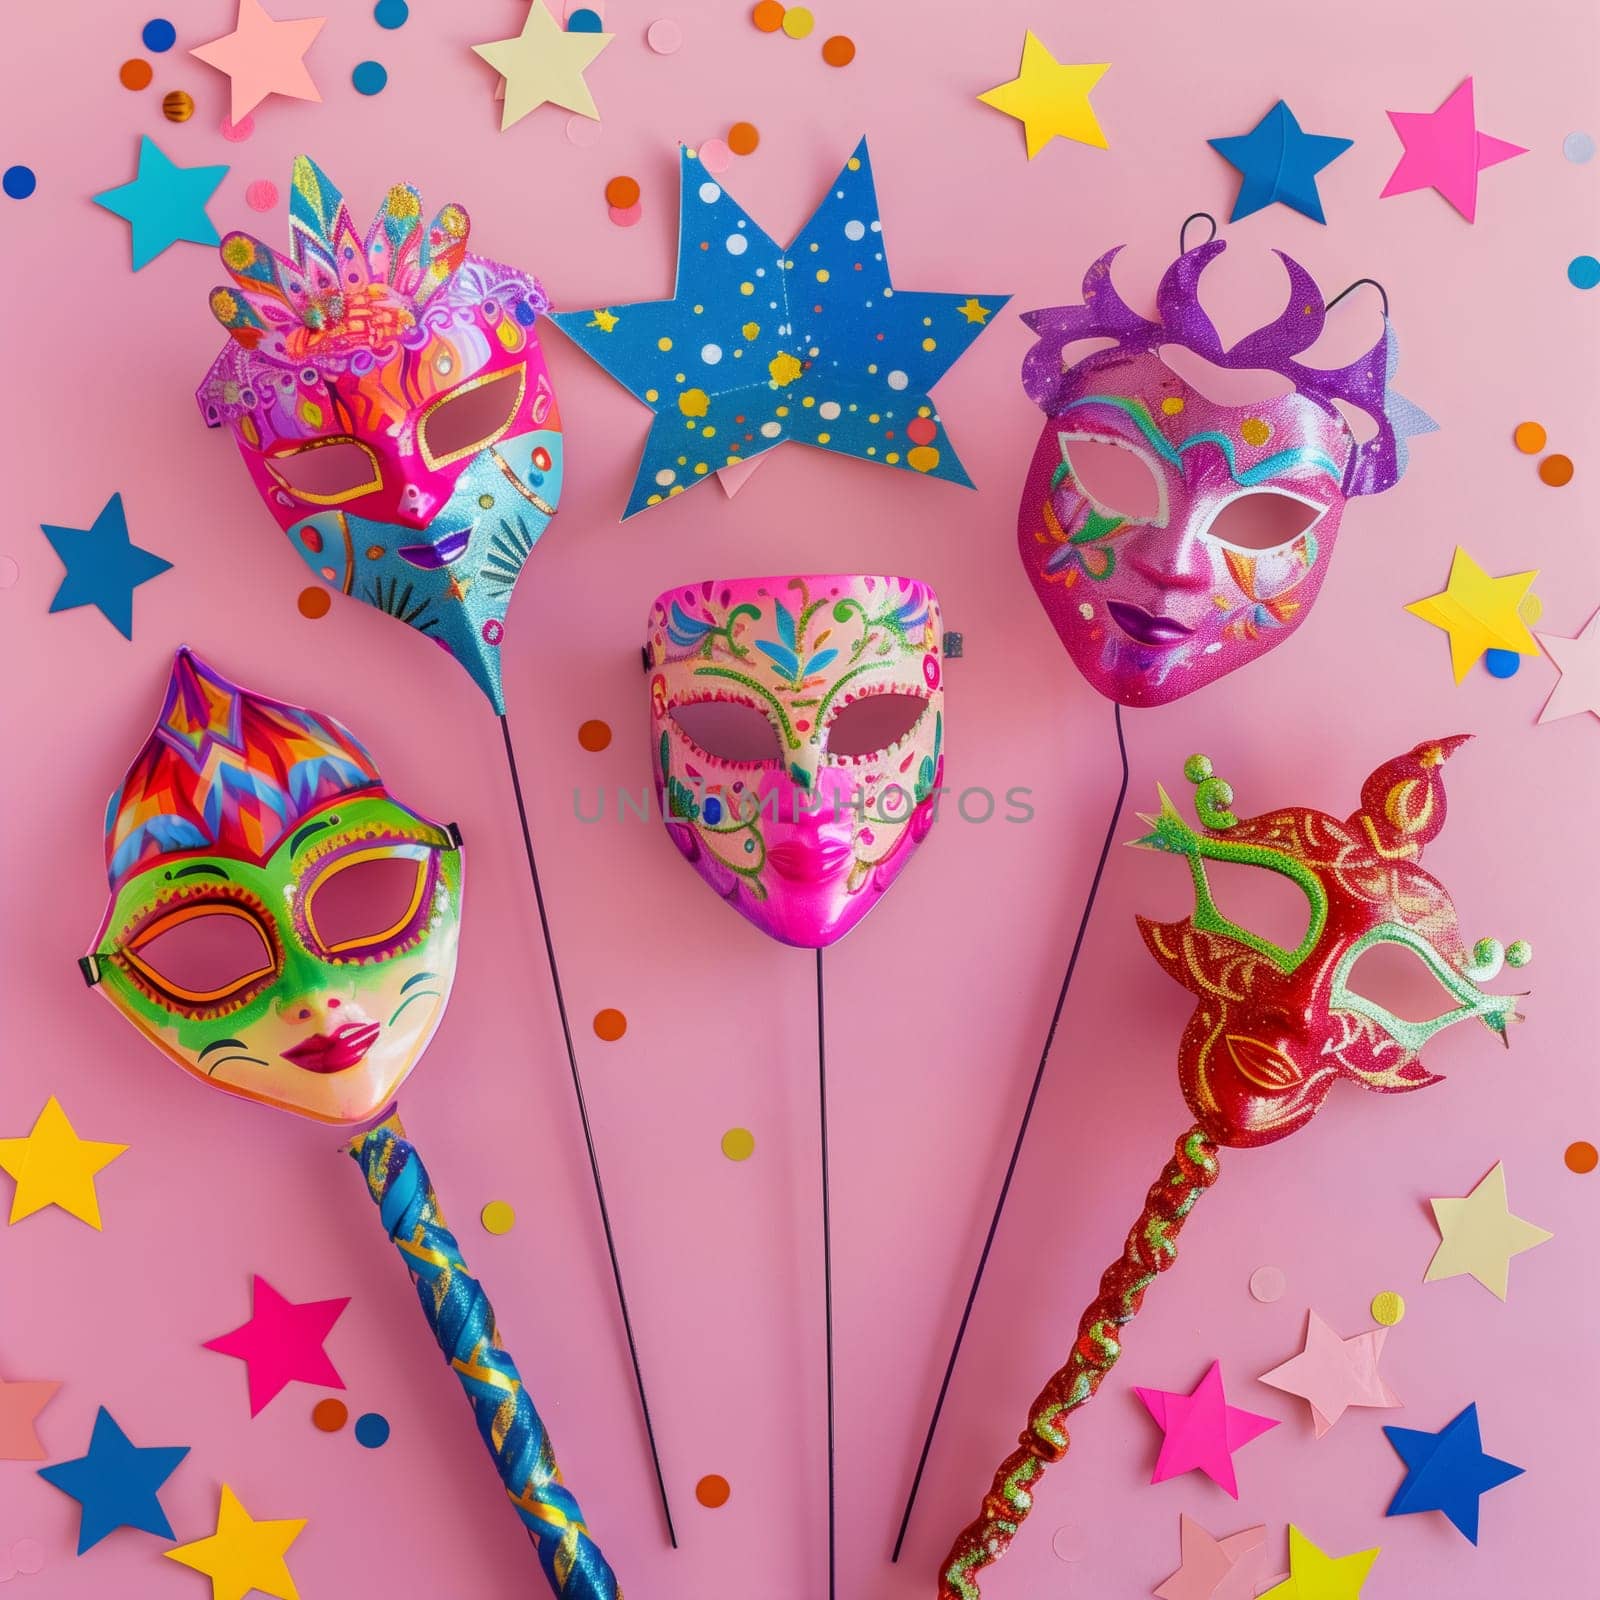 Masquerade masks with stars and confetti on pink. by Nataliya